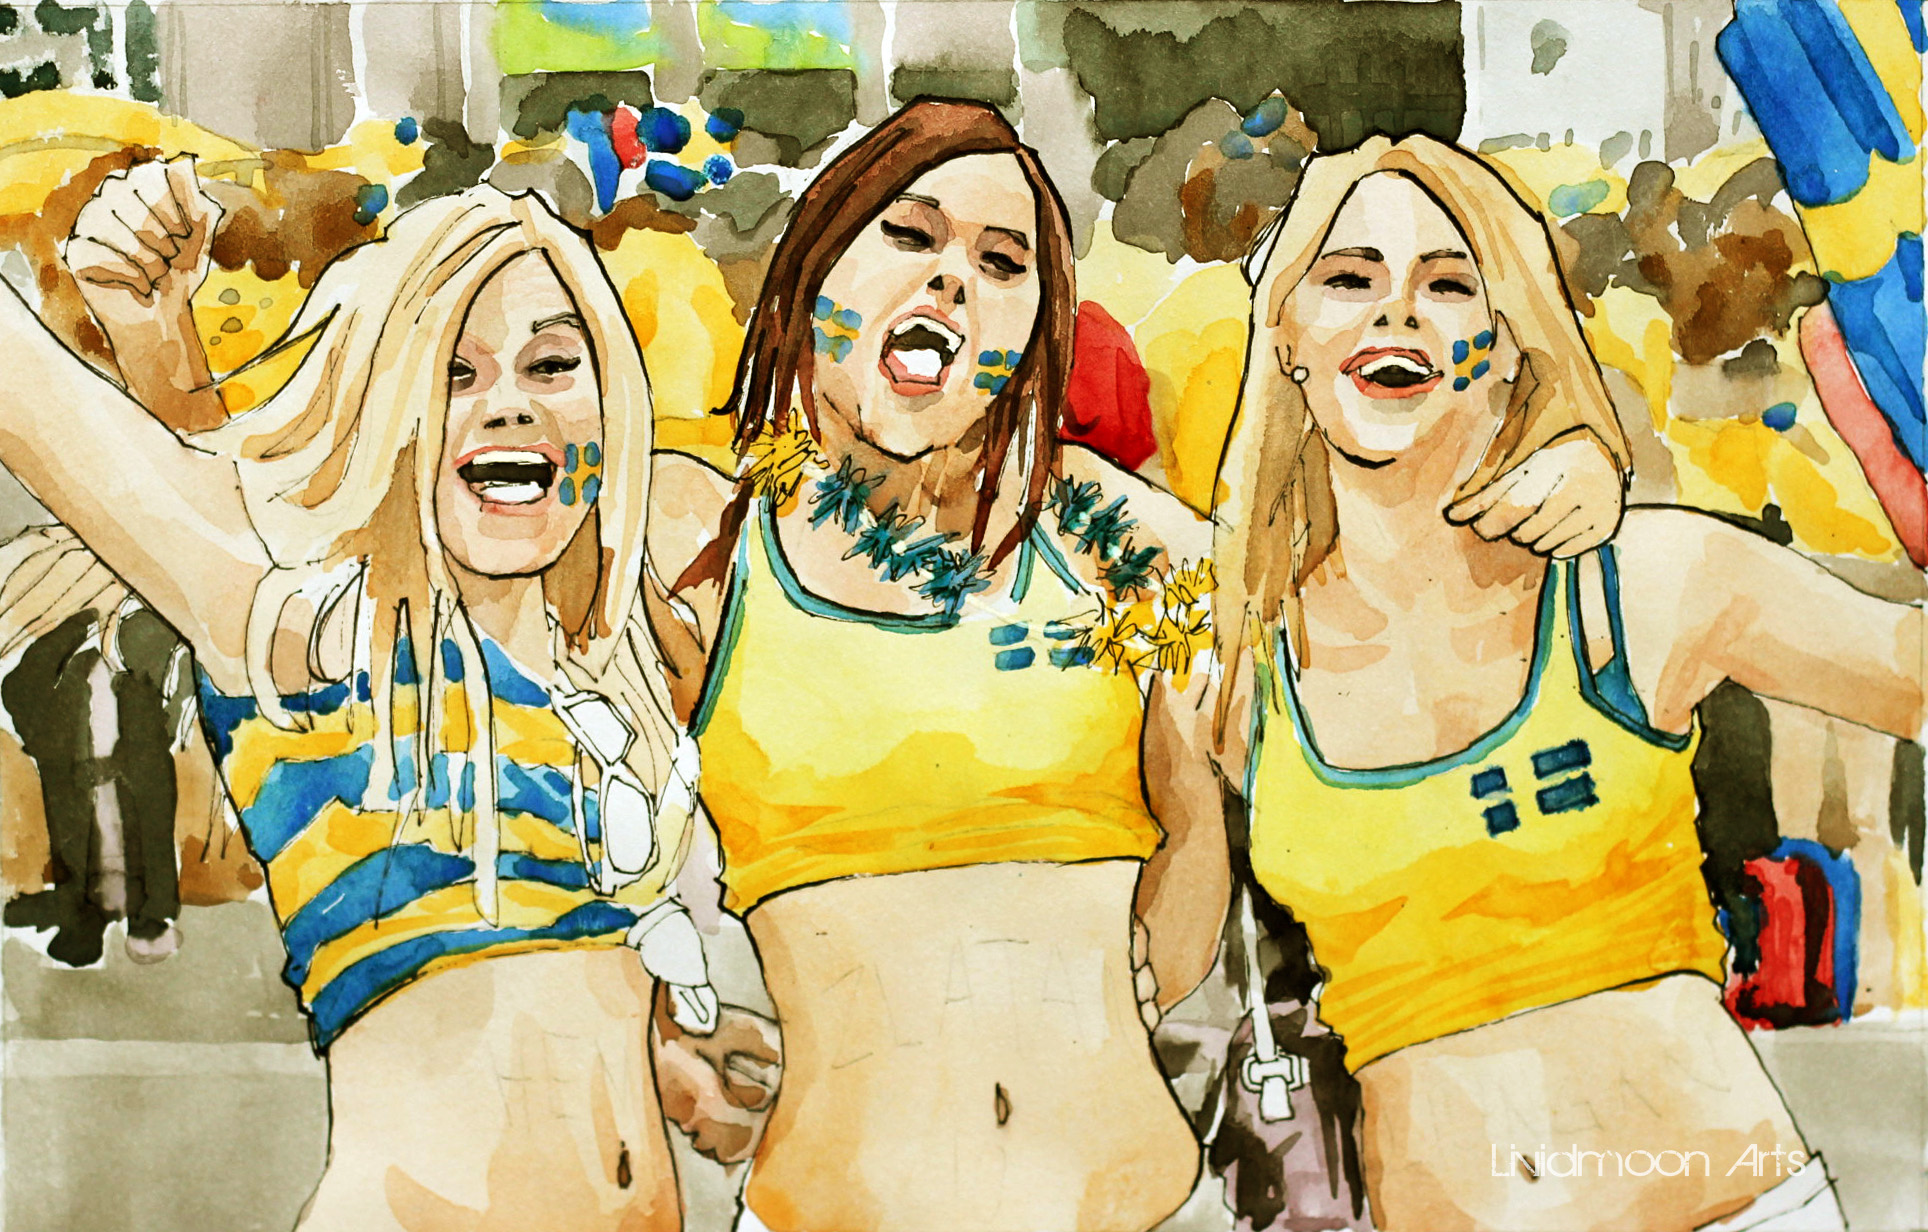 Schwedische Fans